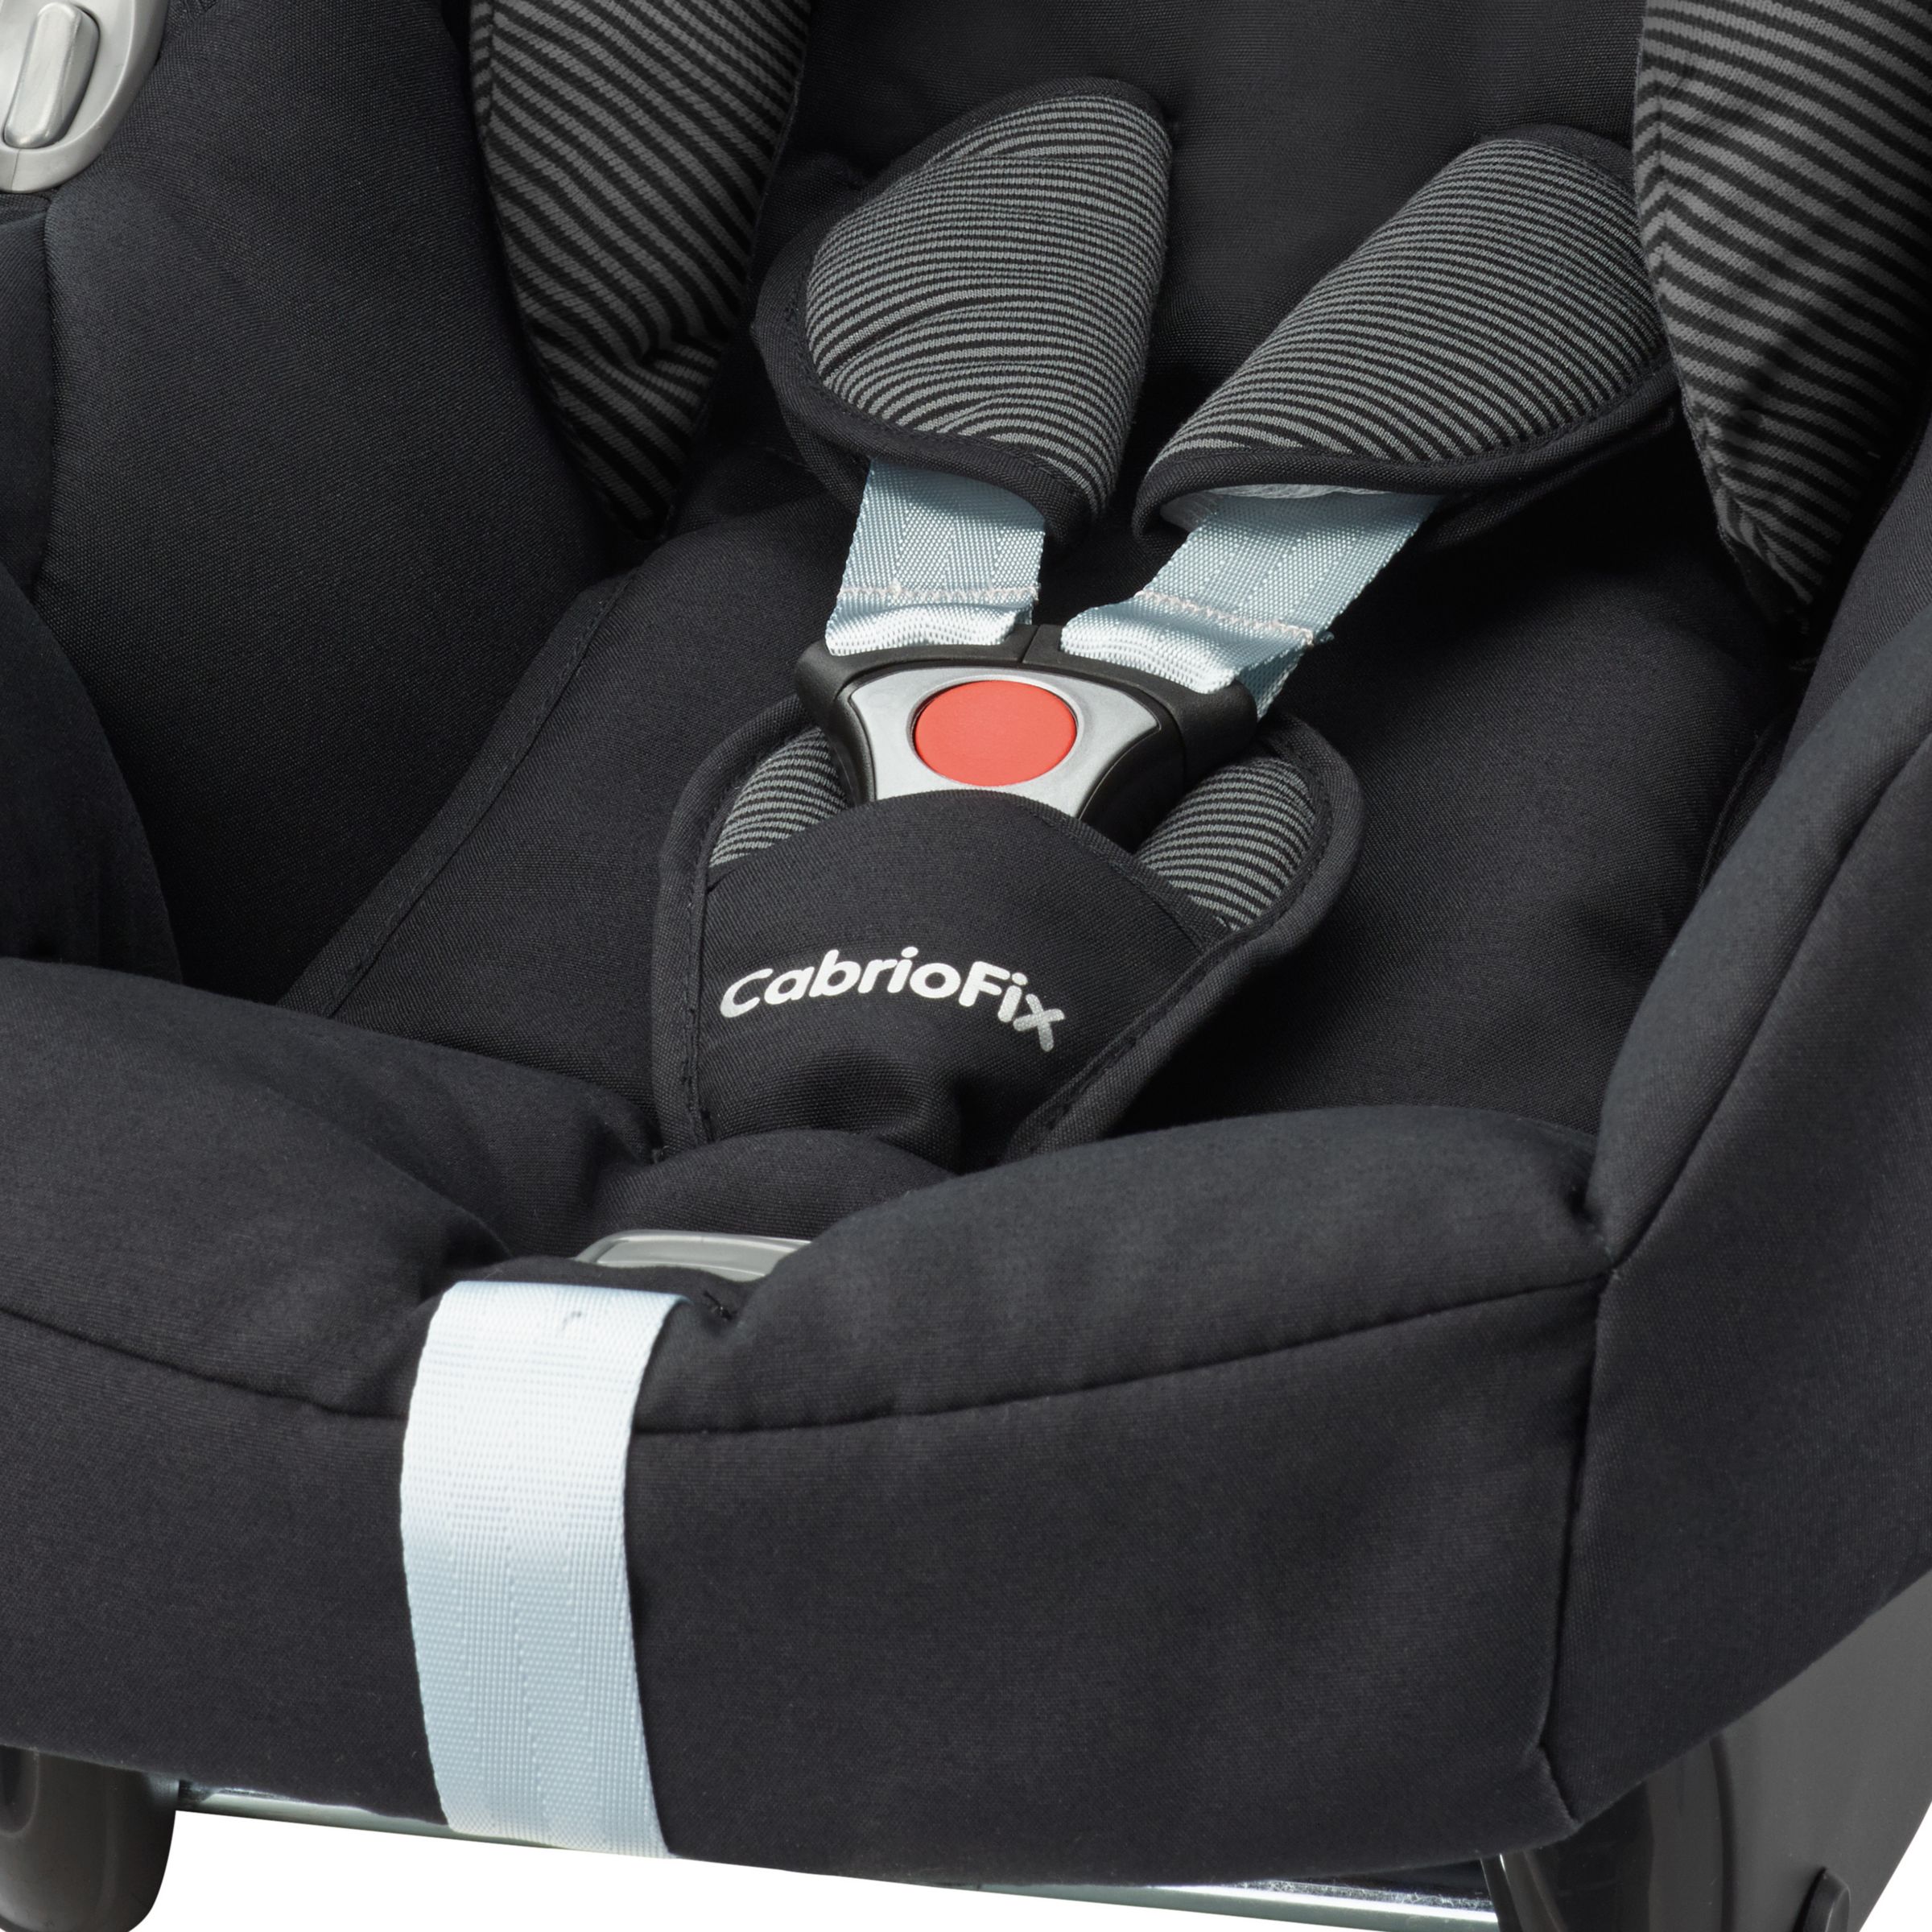 Maxi Cosi Cabriofix Group 0 Baby Car Seat Black Raven At John Lewis Partners